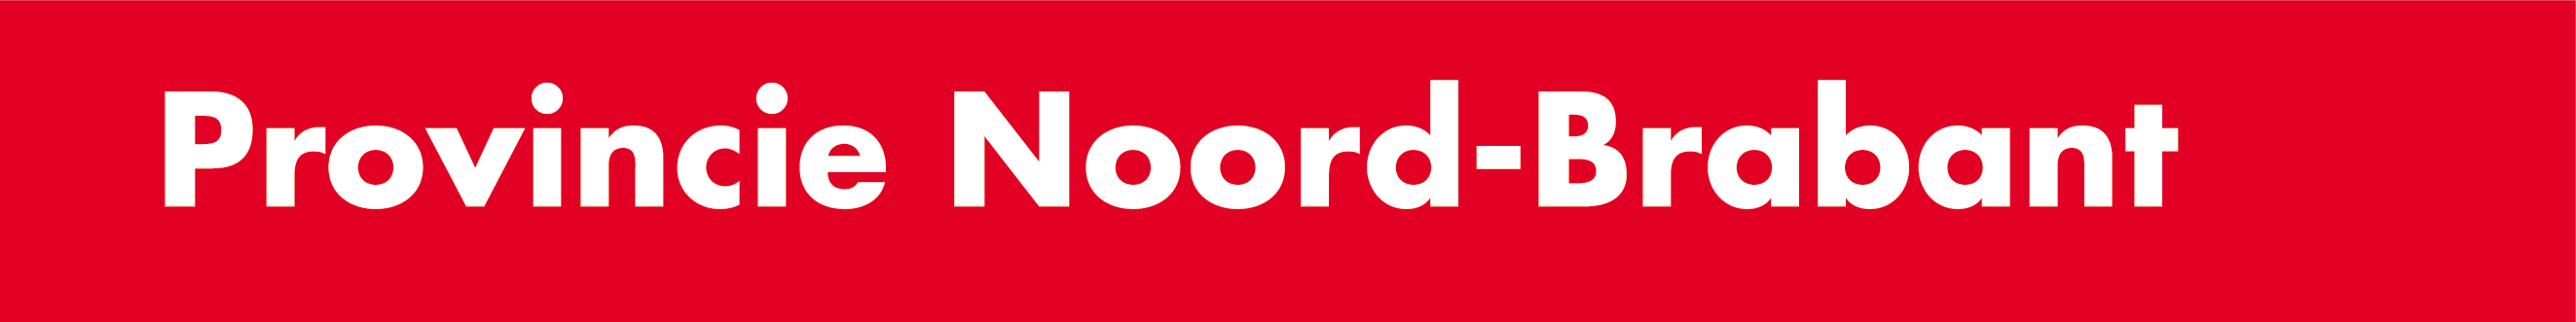 Levendig Brabant 2030 logo